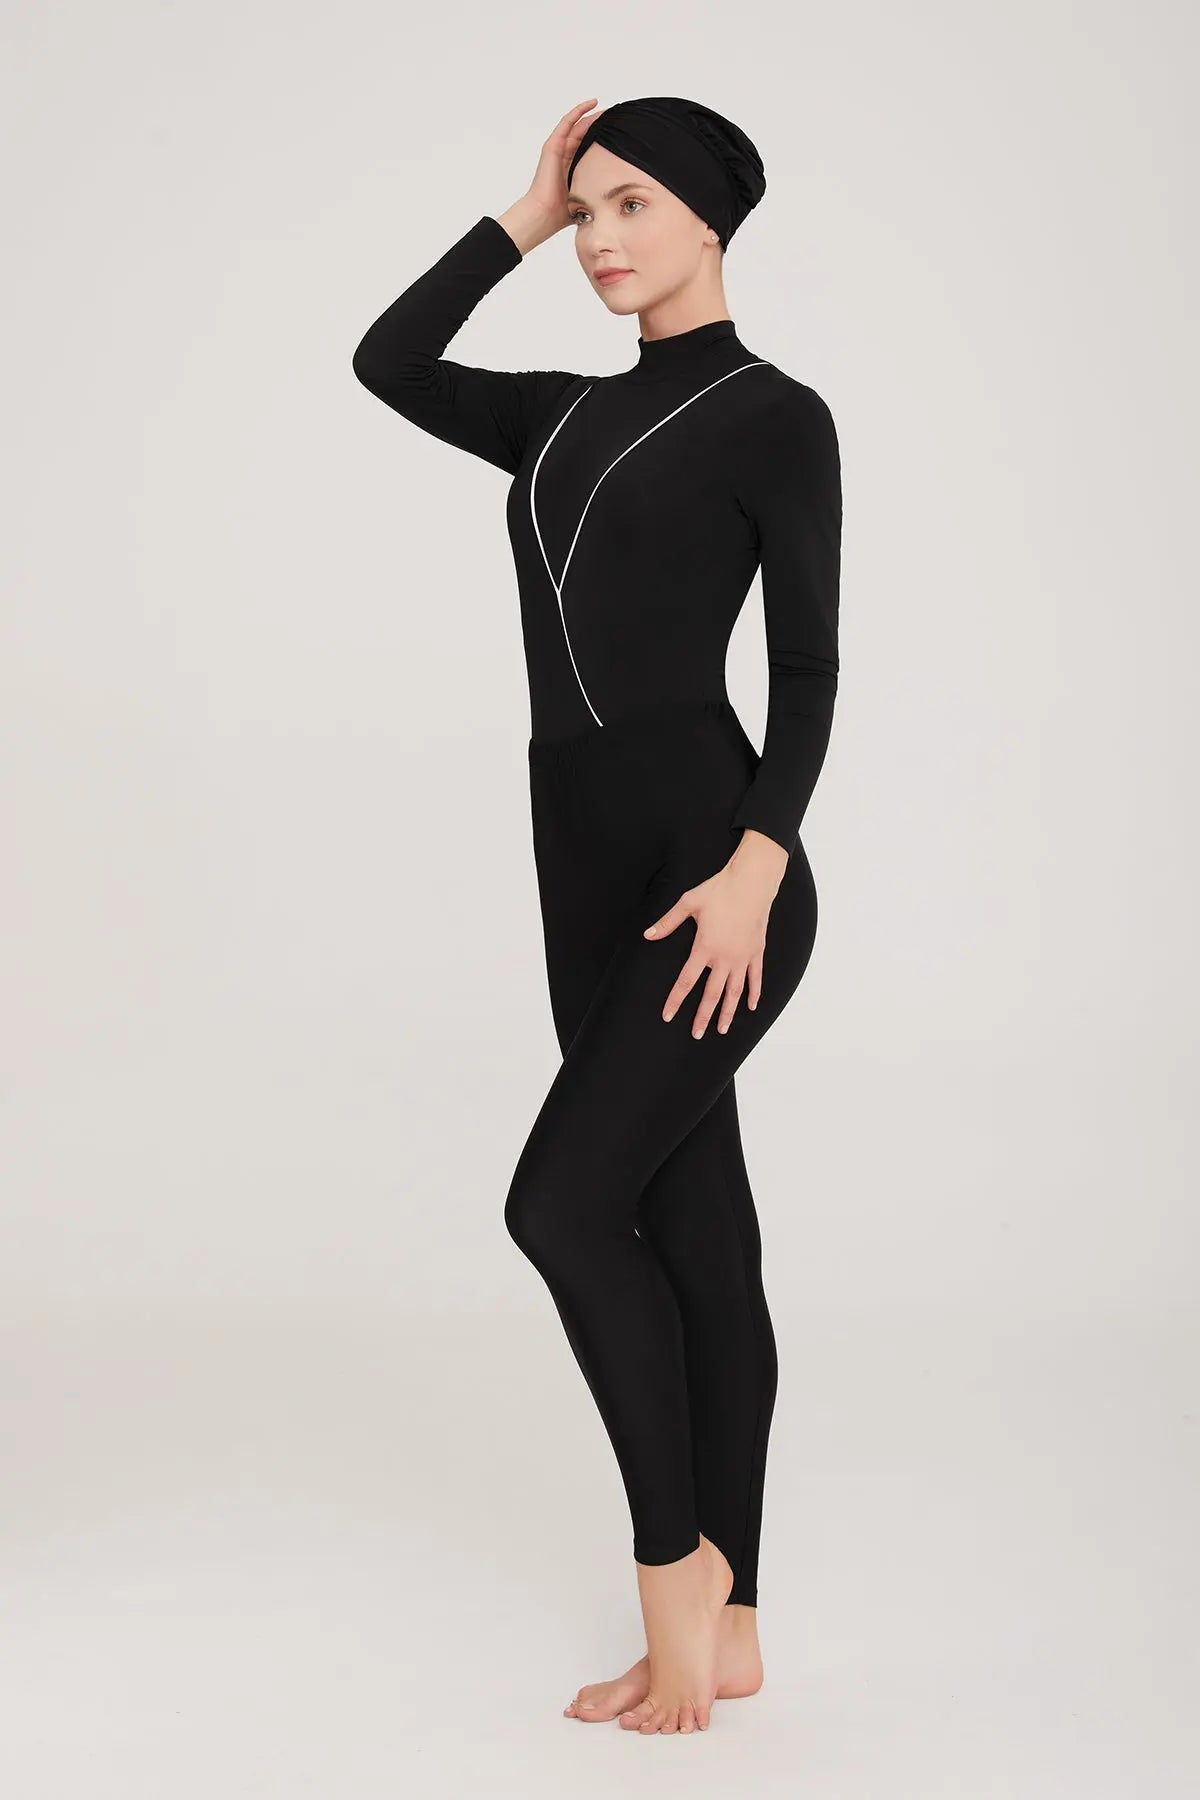 Adasea Burkini  Swimsuit-4458 Voile Fashion